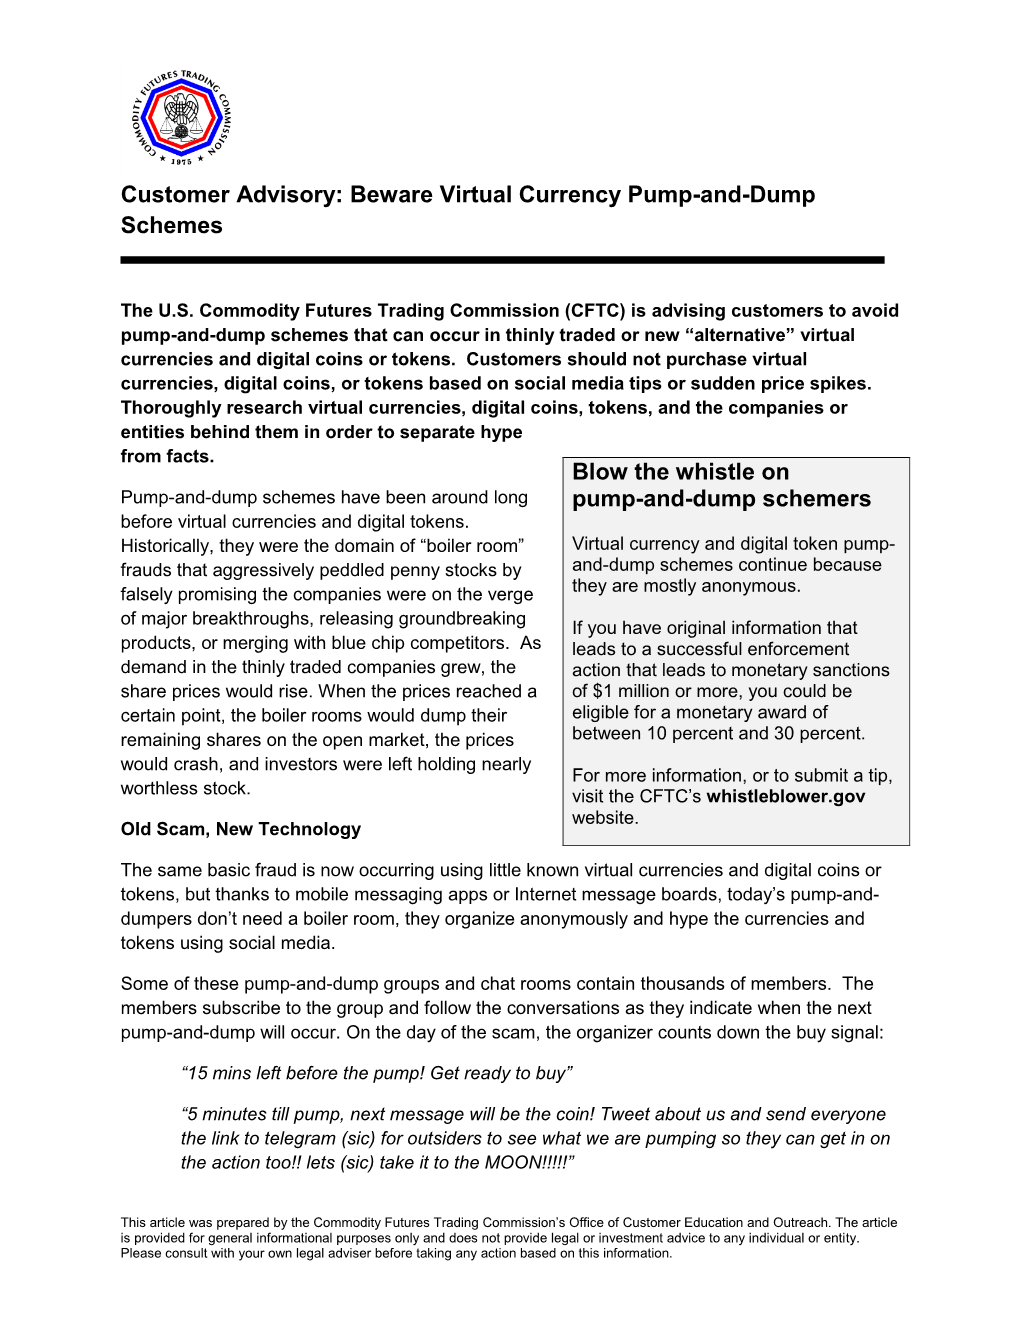 Customer Advisory: Beware Virtual Currency Pump-And-Dump Schemes